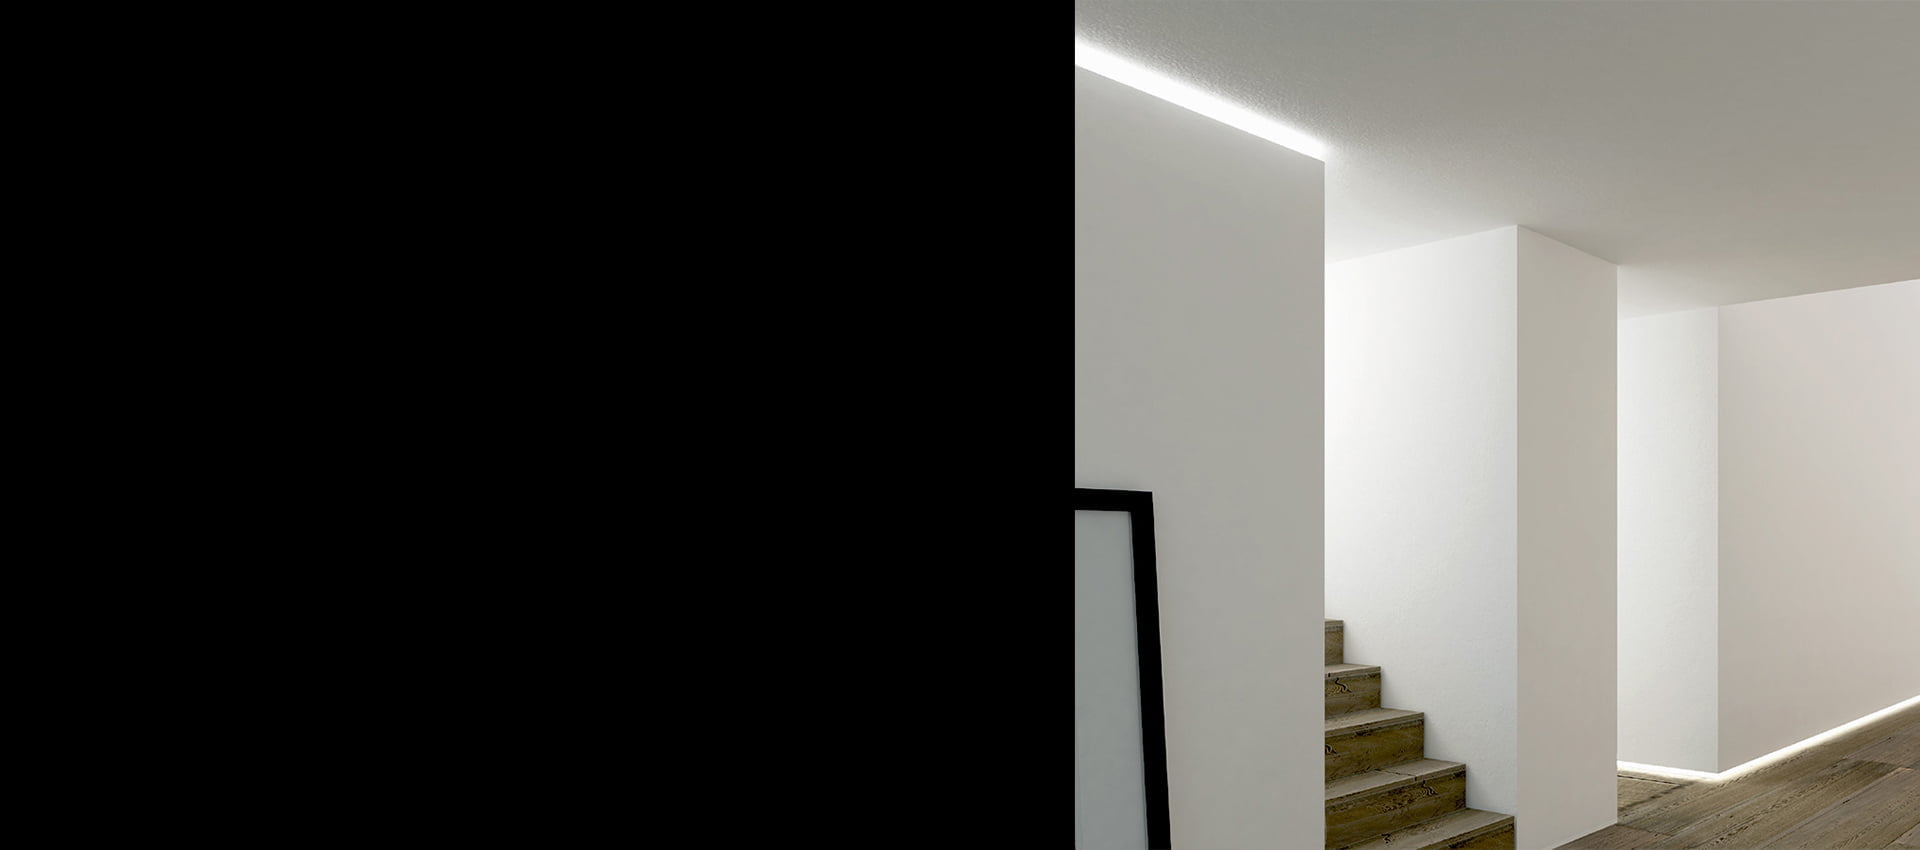 Plinta LED iluminat arhitectural interior Macrolux